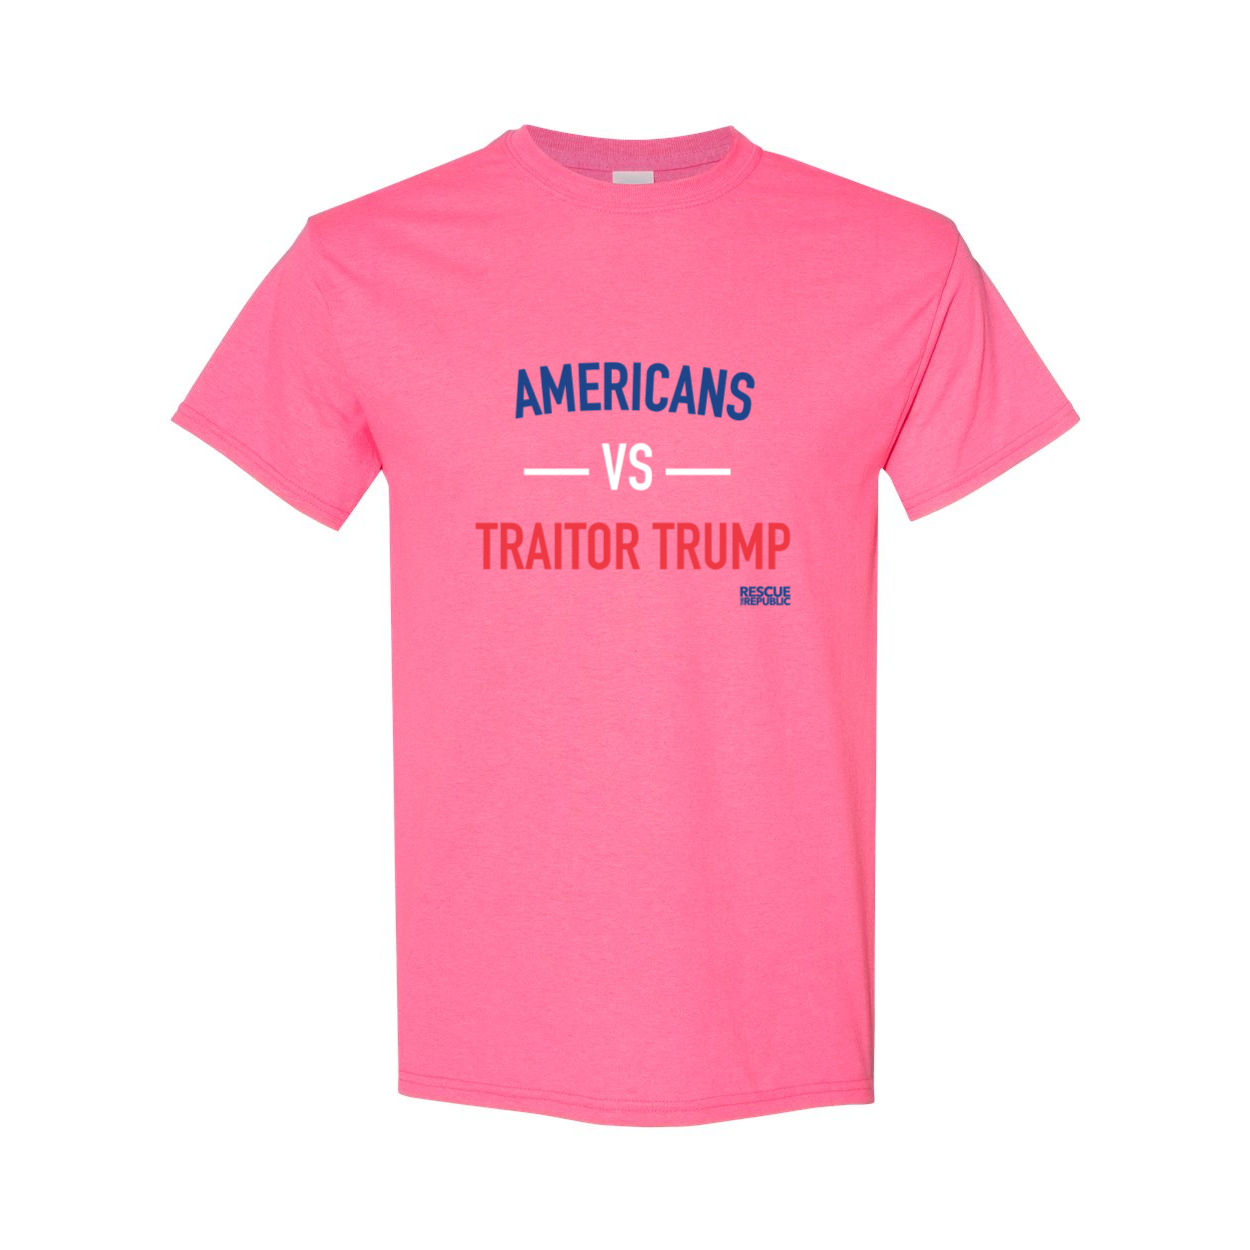 Americans VS Traitor Trump T-Shirt